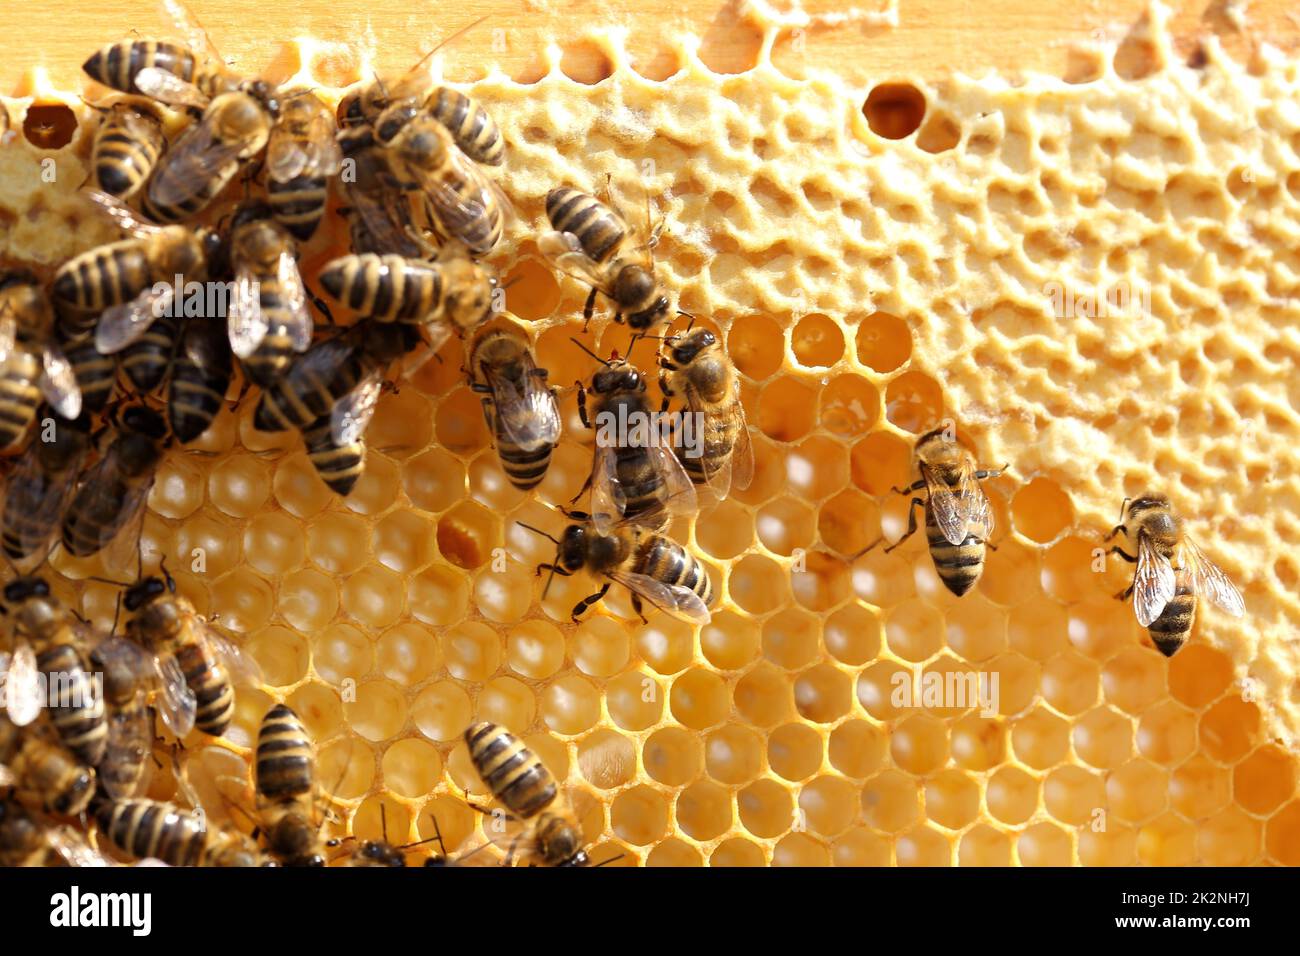 many honey bees on a yellow bee hive Stock Photo